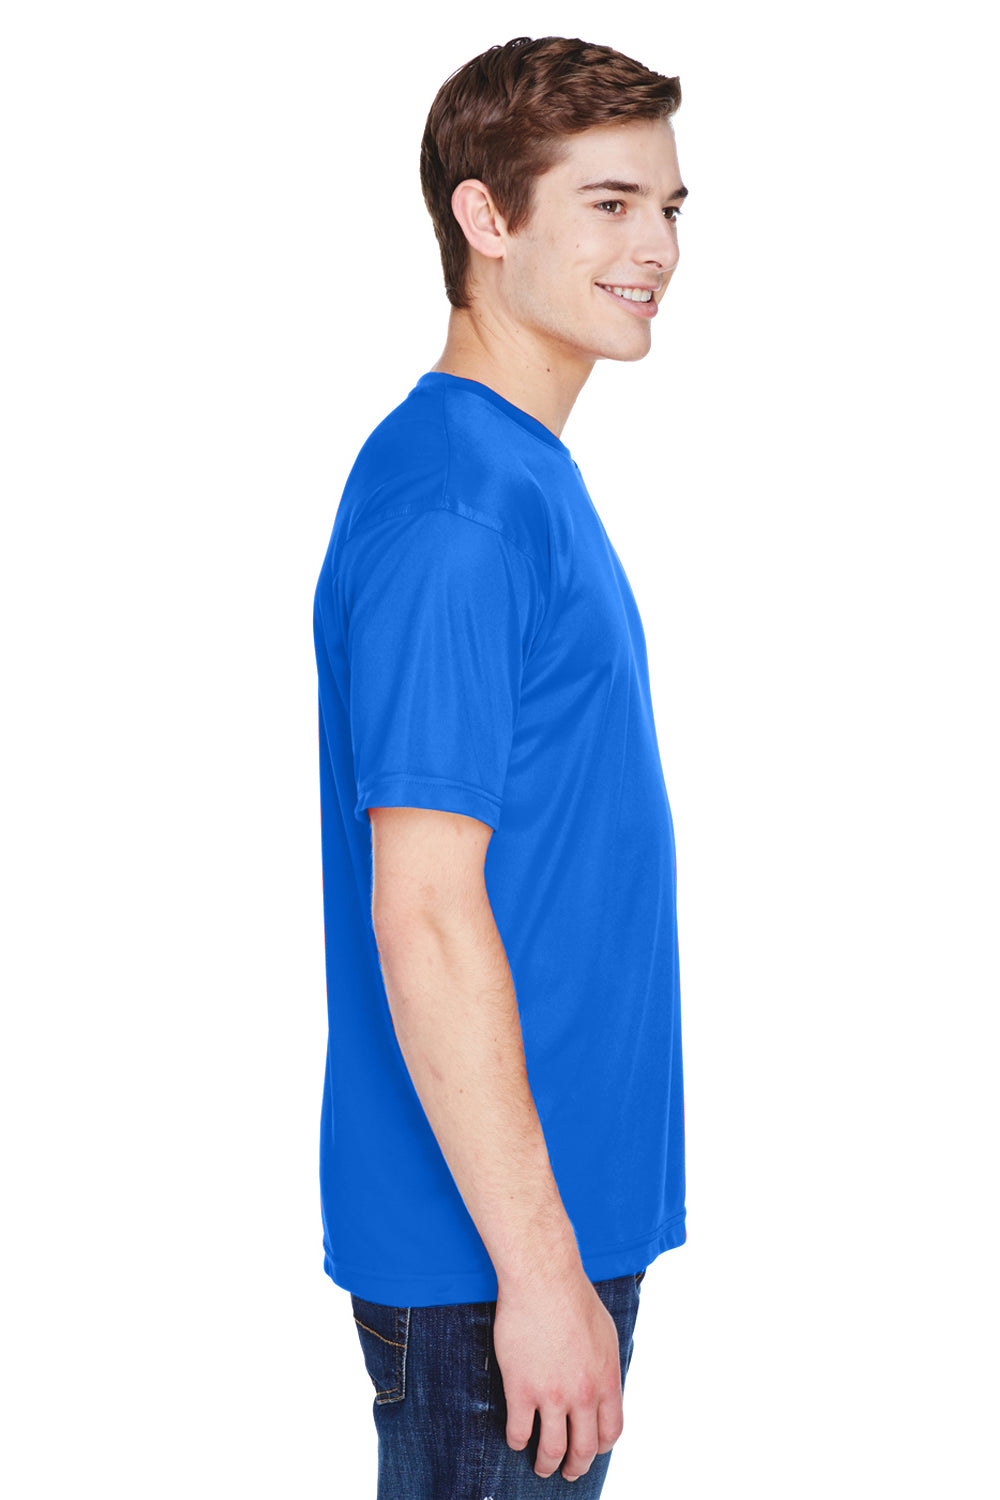 UltraClub 8620 Mens Cool & Dry Performance Moisture Wicking Short Sleeve Crewneck T-Shirt Royal Blue Side